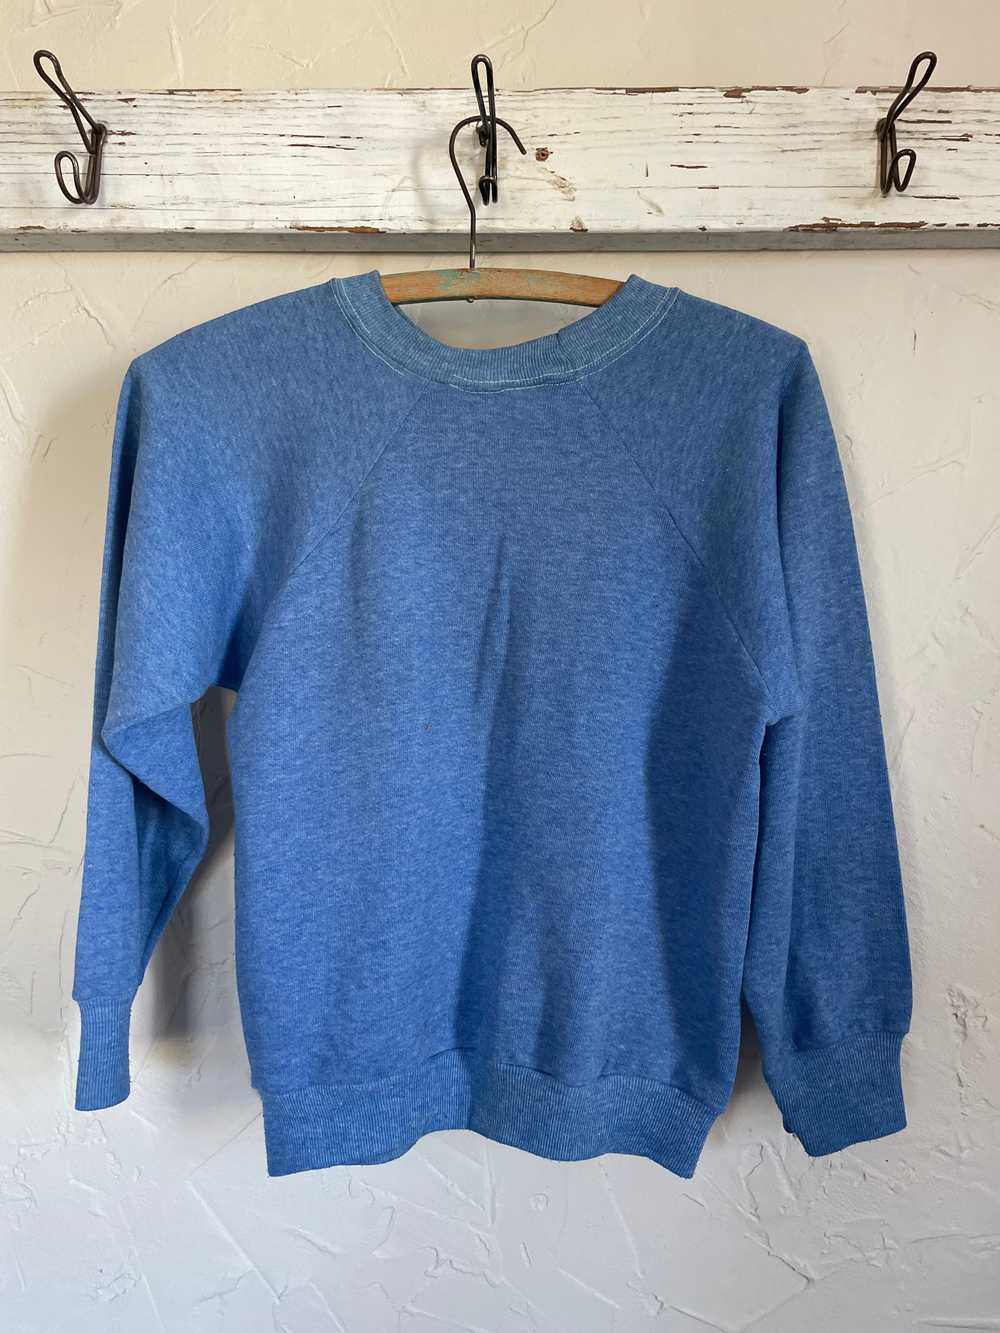 70s/80s Blank Blue Sweatshirt - image 3